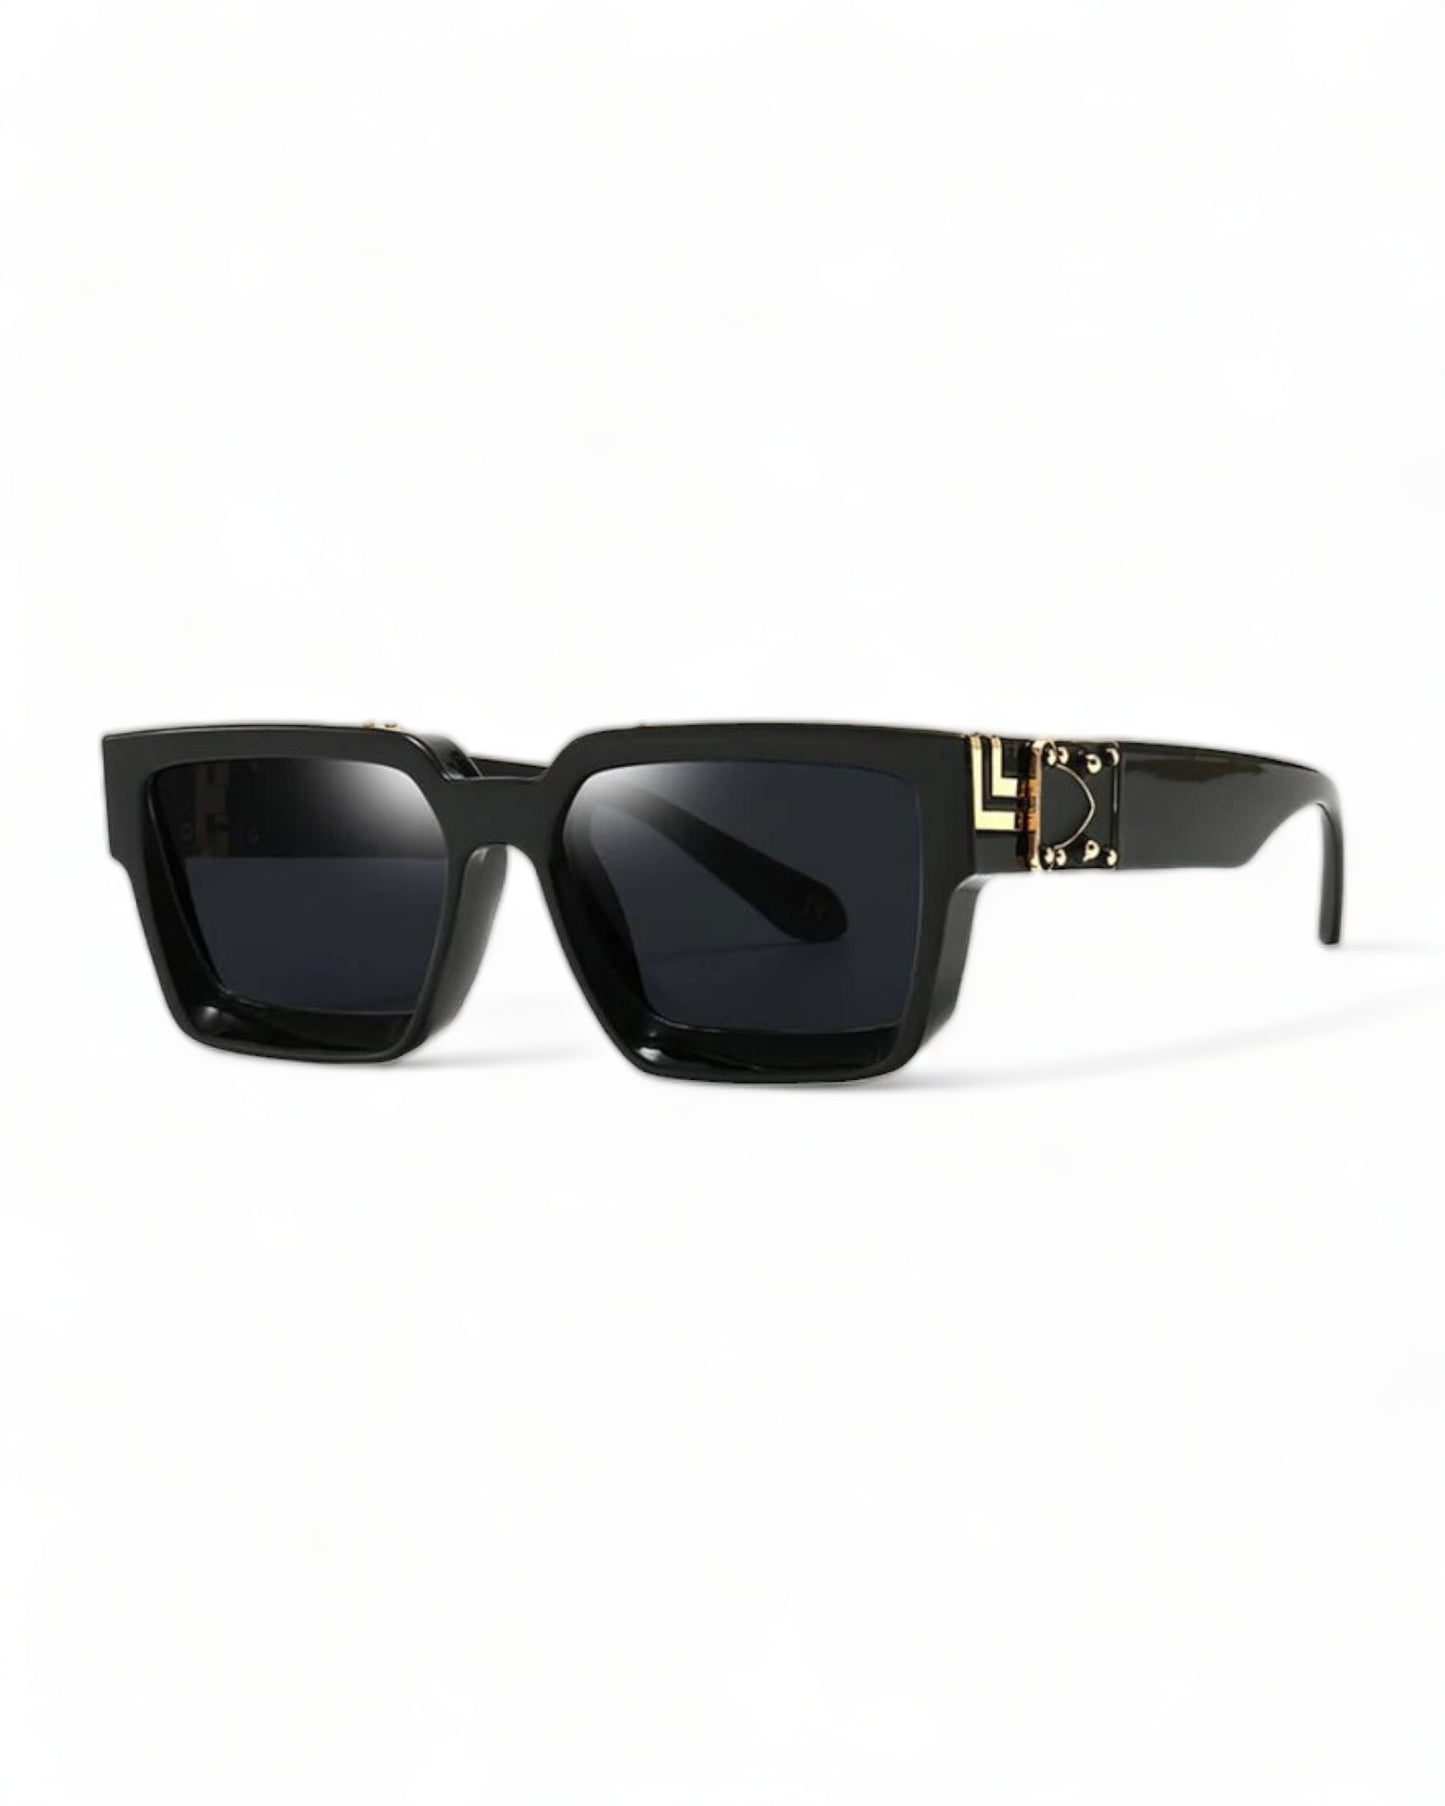 square sunglasses black gold frame black lens Festival Fashion